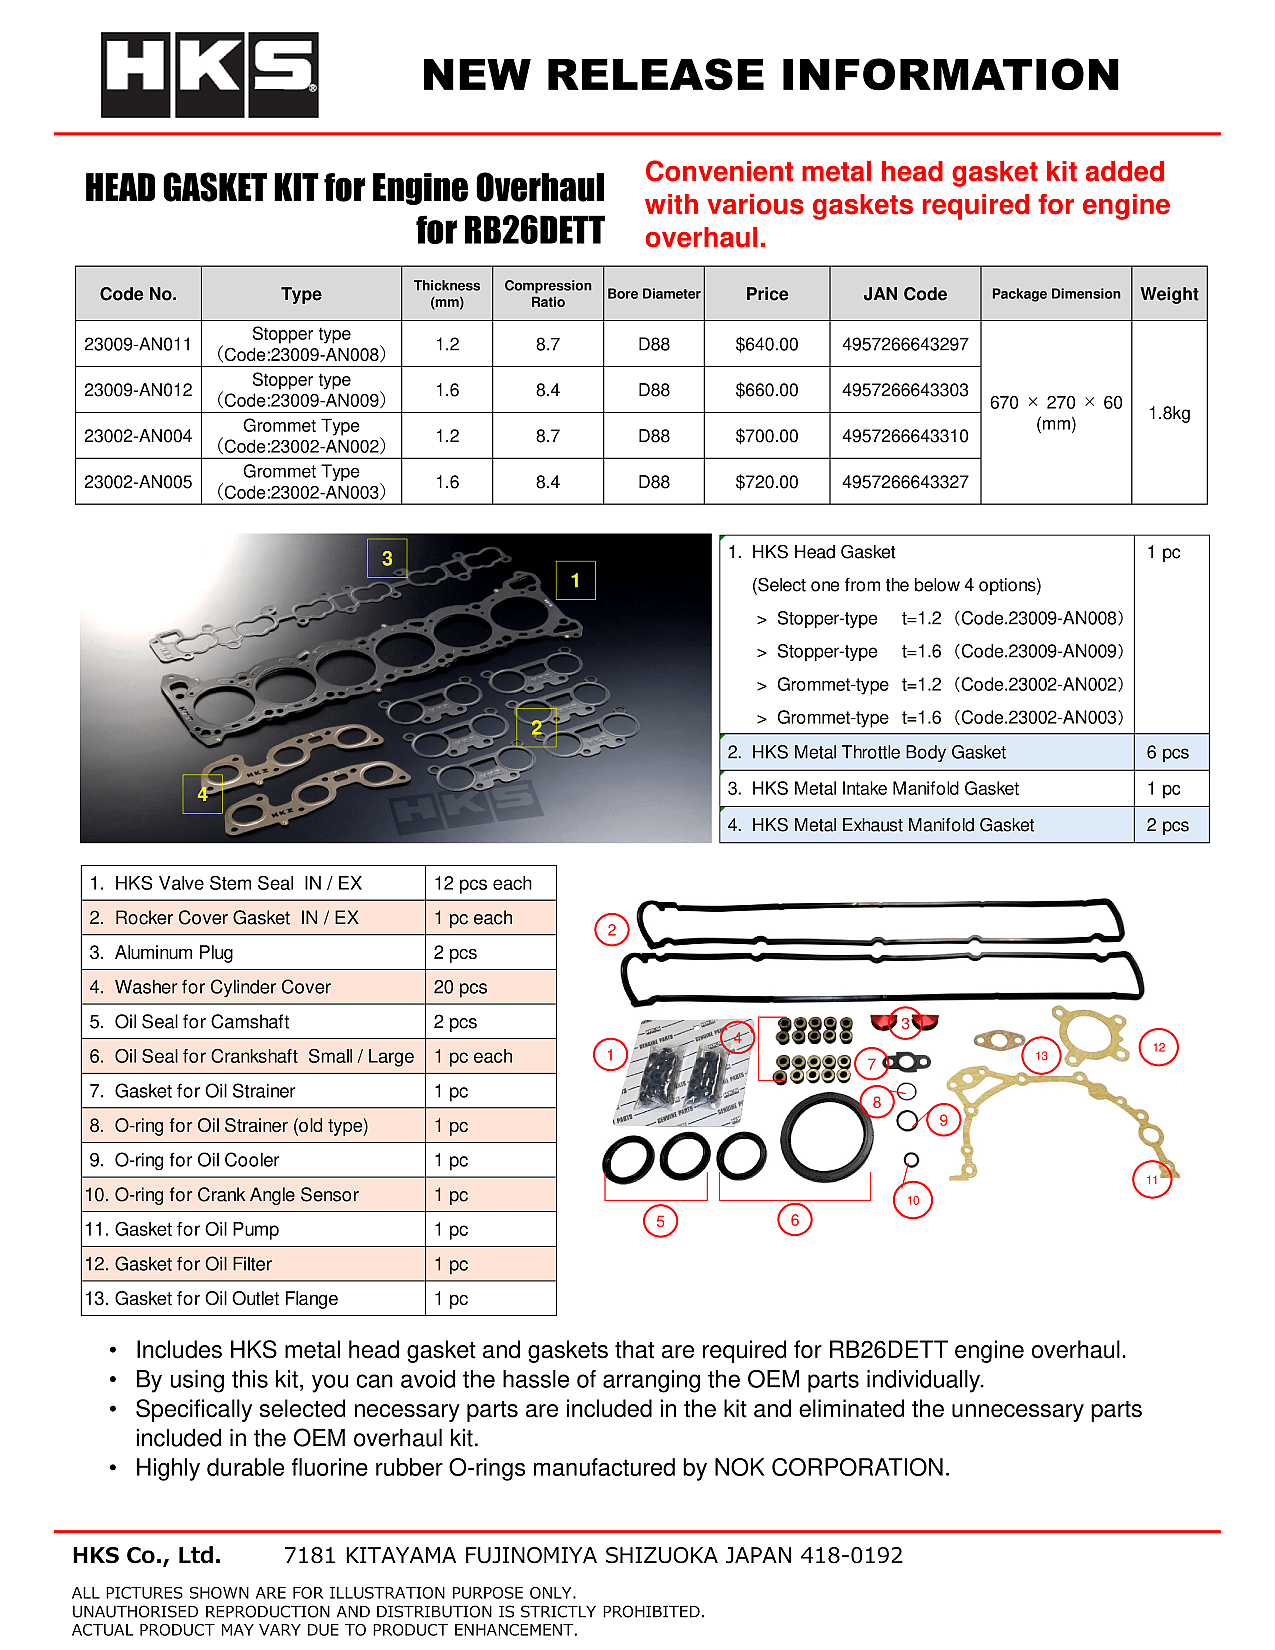 23009-AN012 Head Gasket Kit for RB26DETT Overhaul.png